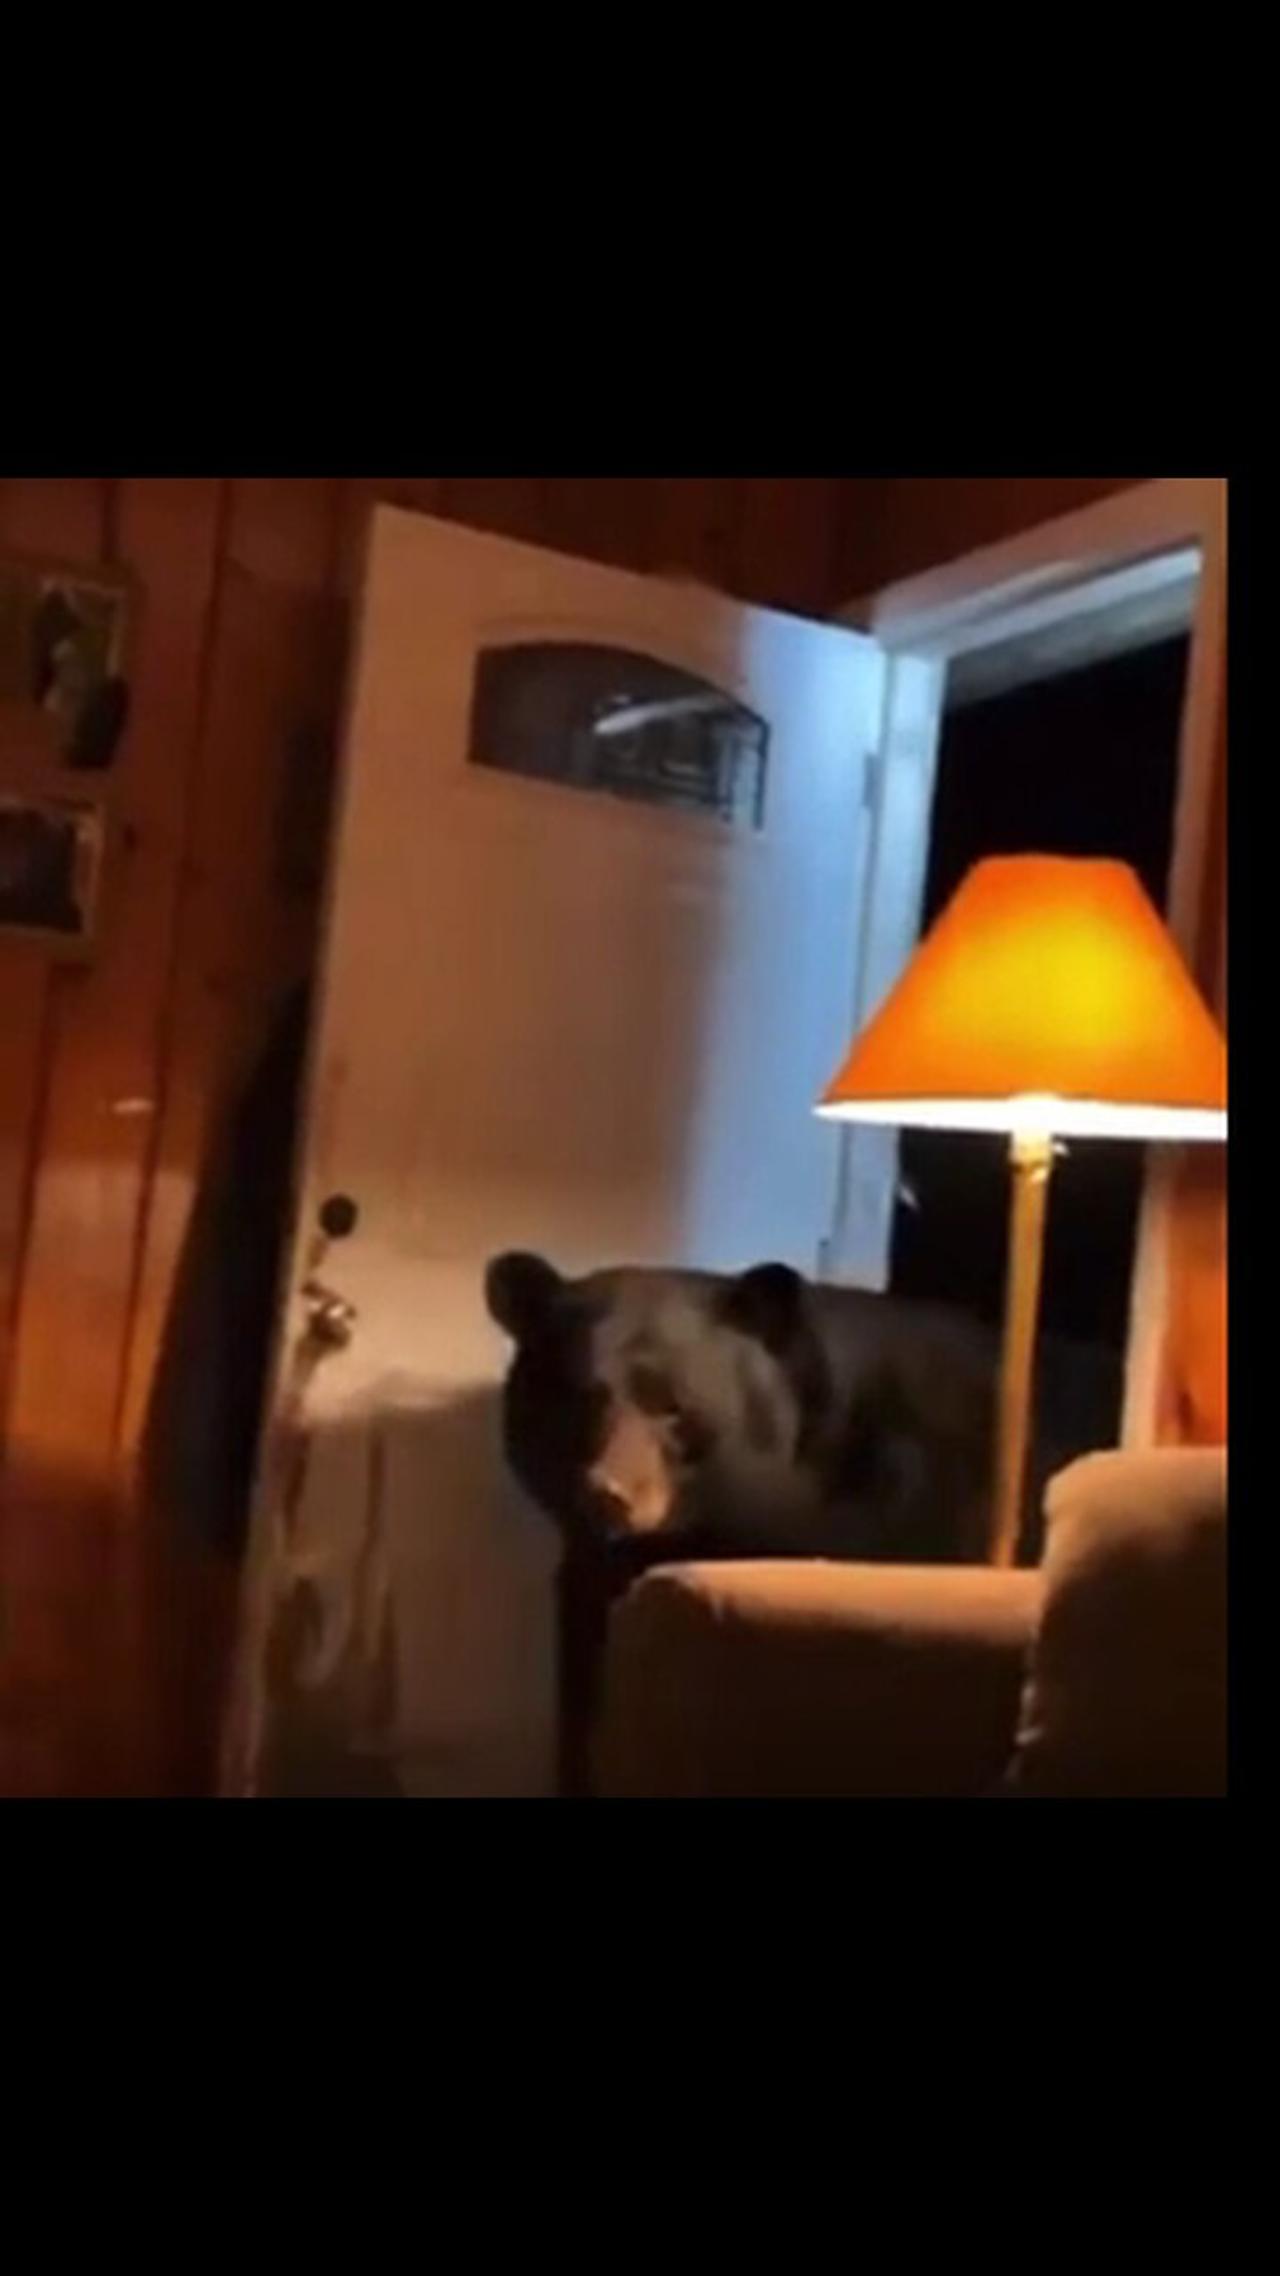 Black Bear Steals Woman's Vacuum Cleaner